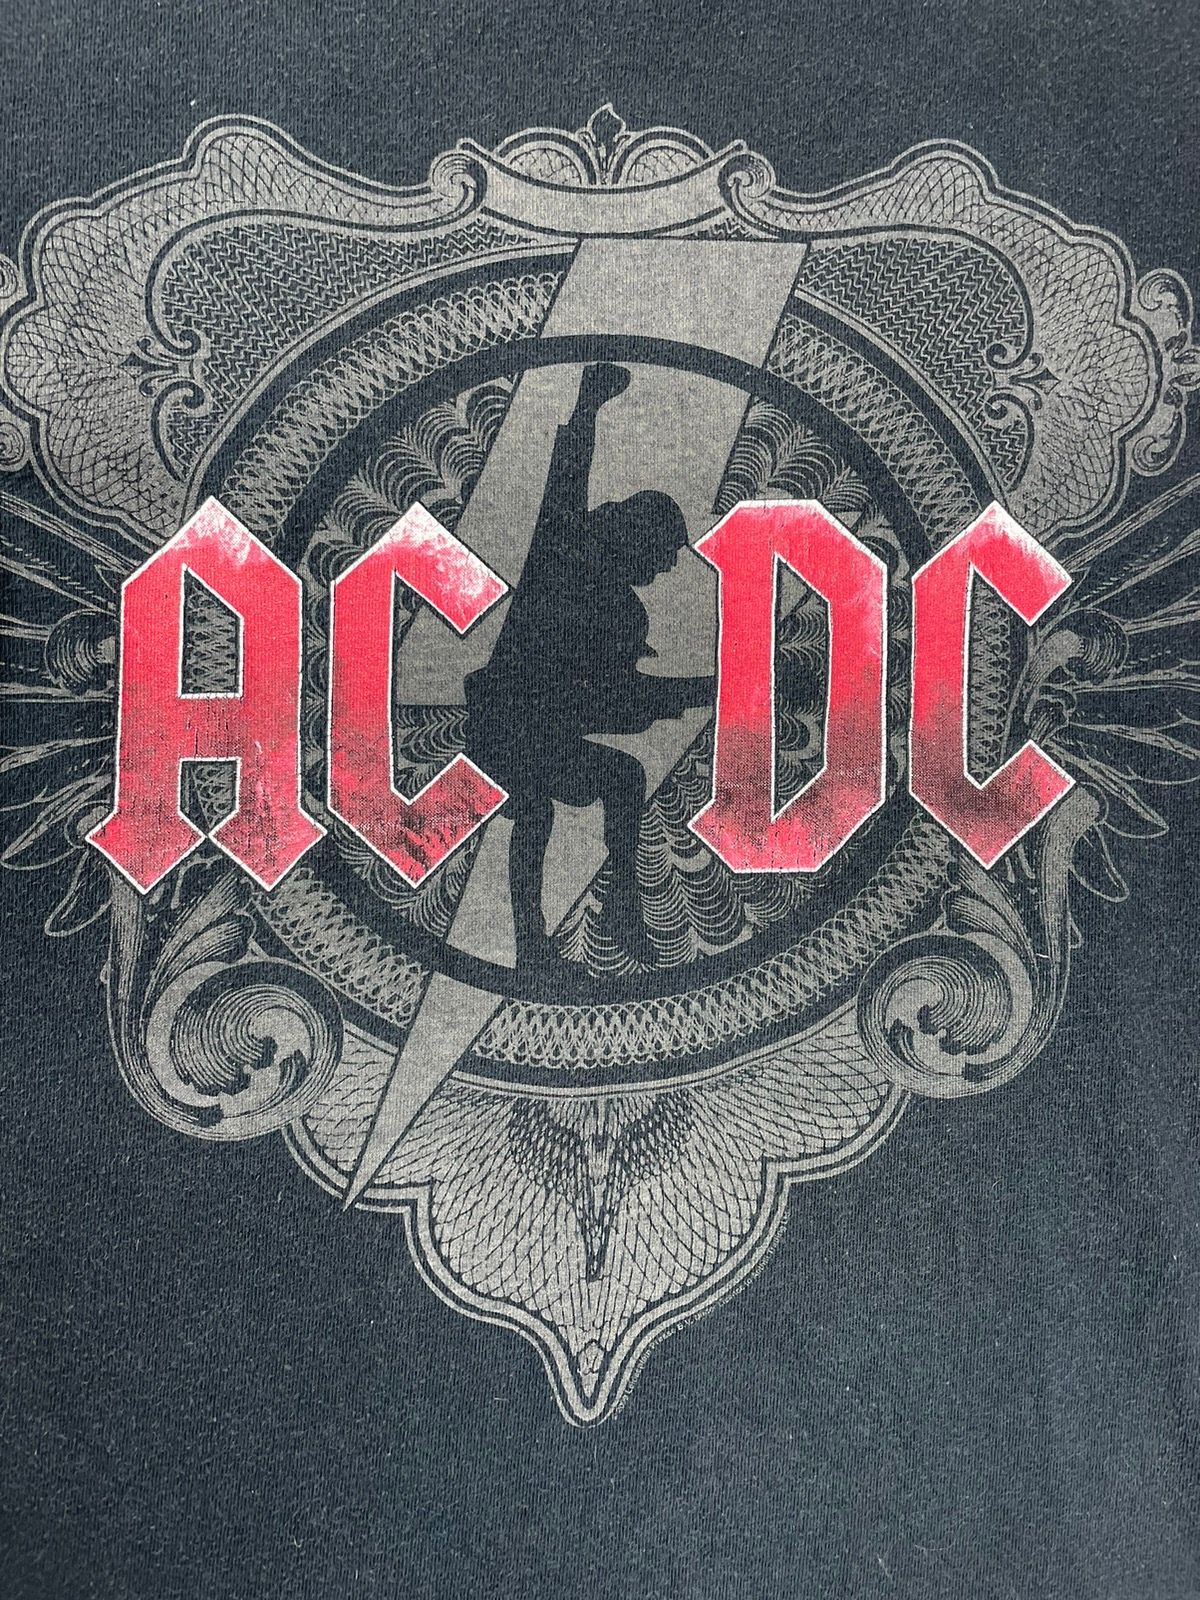 Vintage Vintage Ac/Dc Rock Band tee t-shirt Size US S / EU 44-46 / 1 - 3 Thumbnail